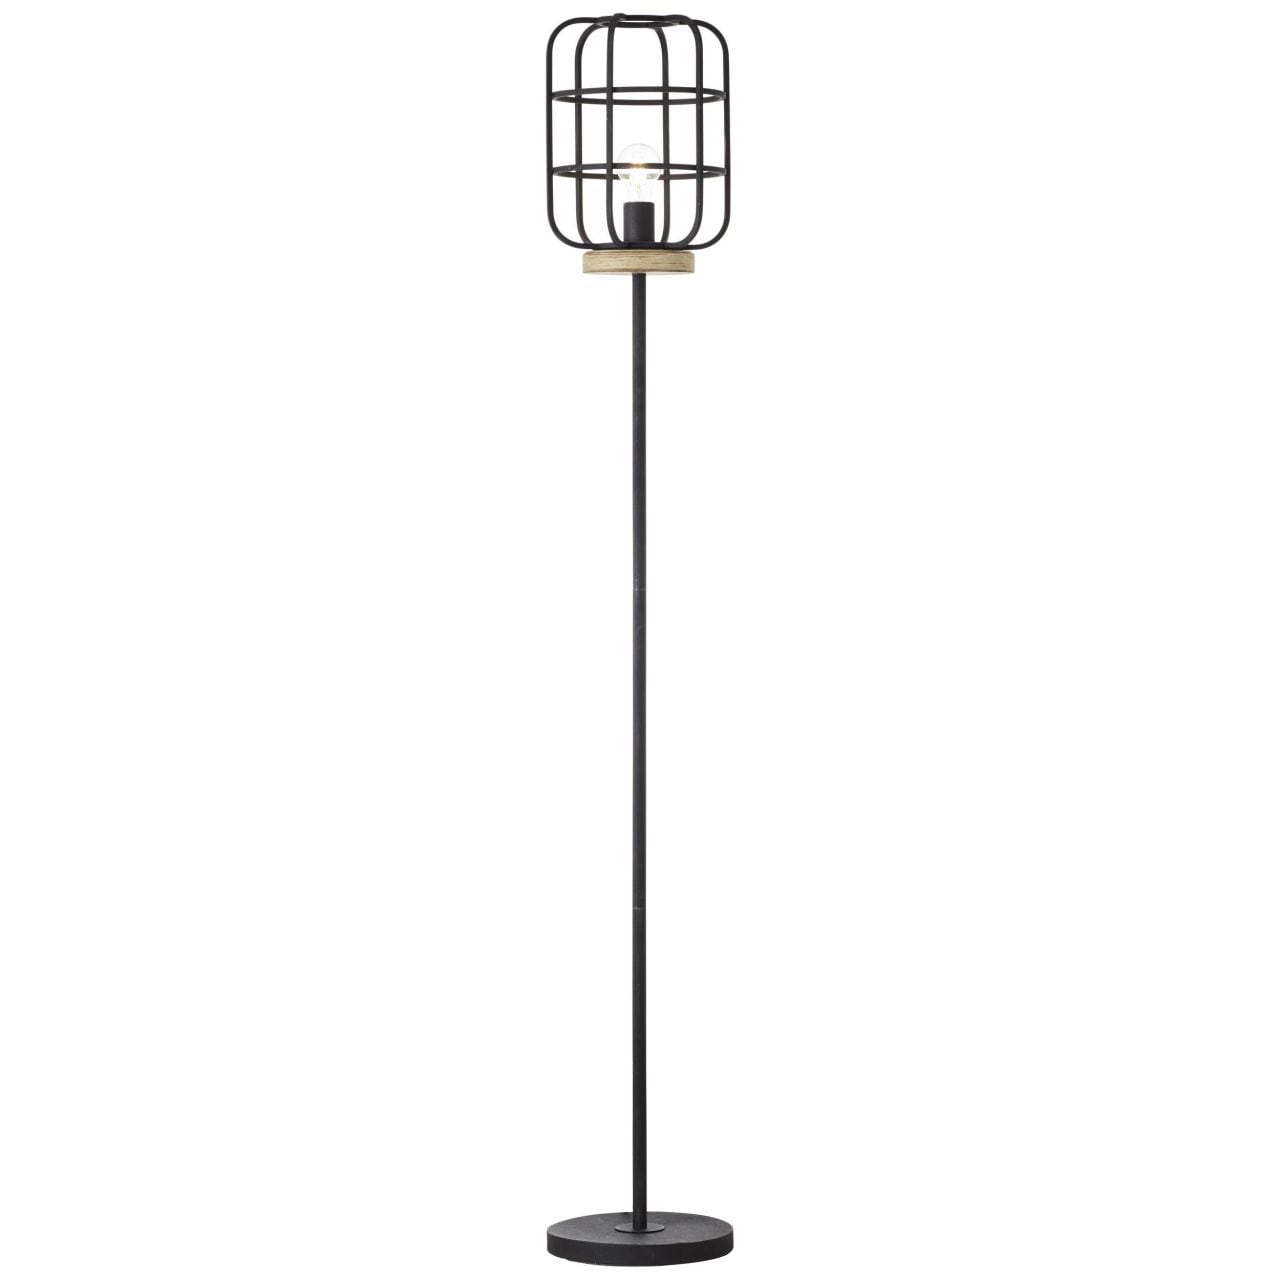 Brilliant Stehlampe »Gwen«, 1 flammig-flammig, 163 cm Höhe, Ø 25 cm, E27, Metall/Holz, antik holz/schwarz korund